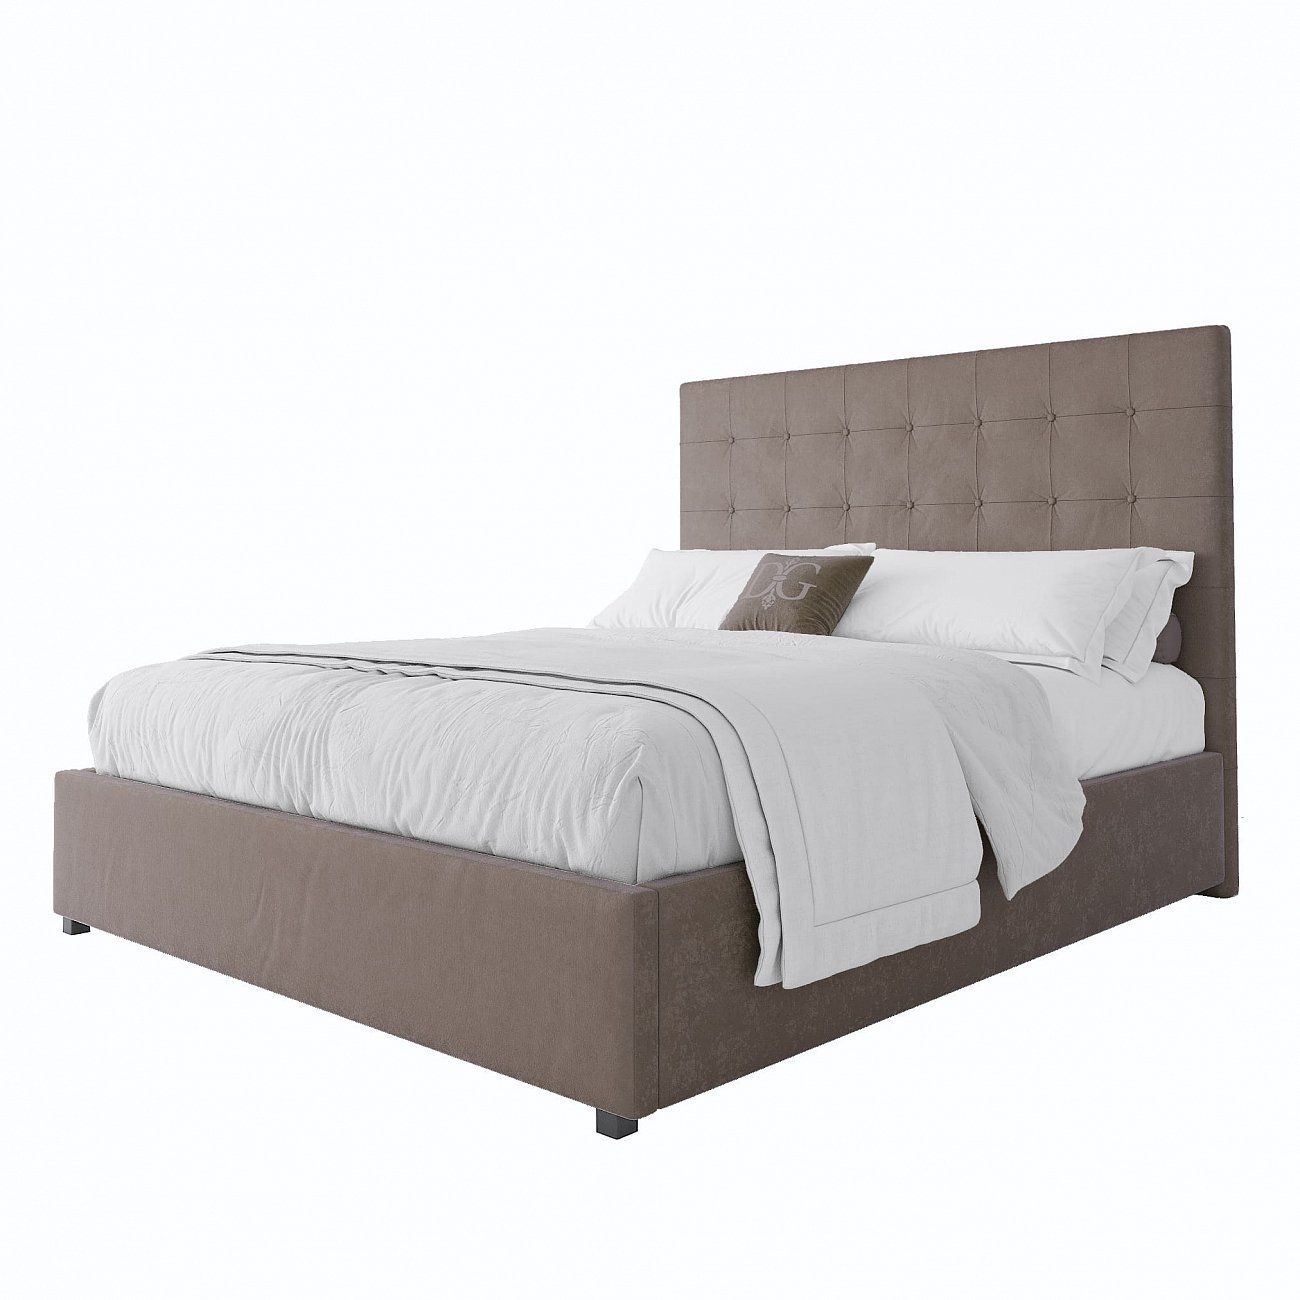 Double bed 160x200 beige Royal Black